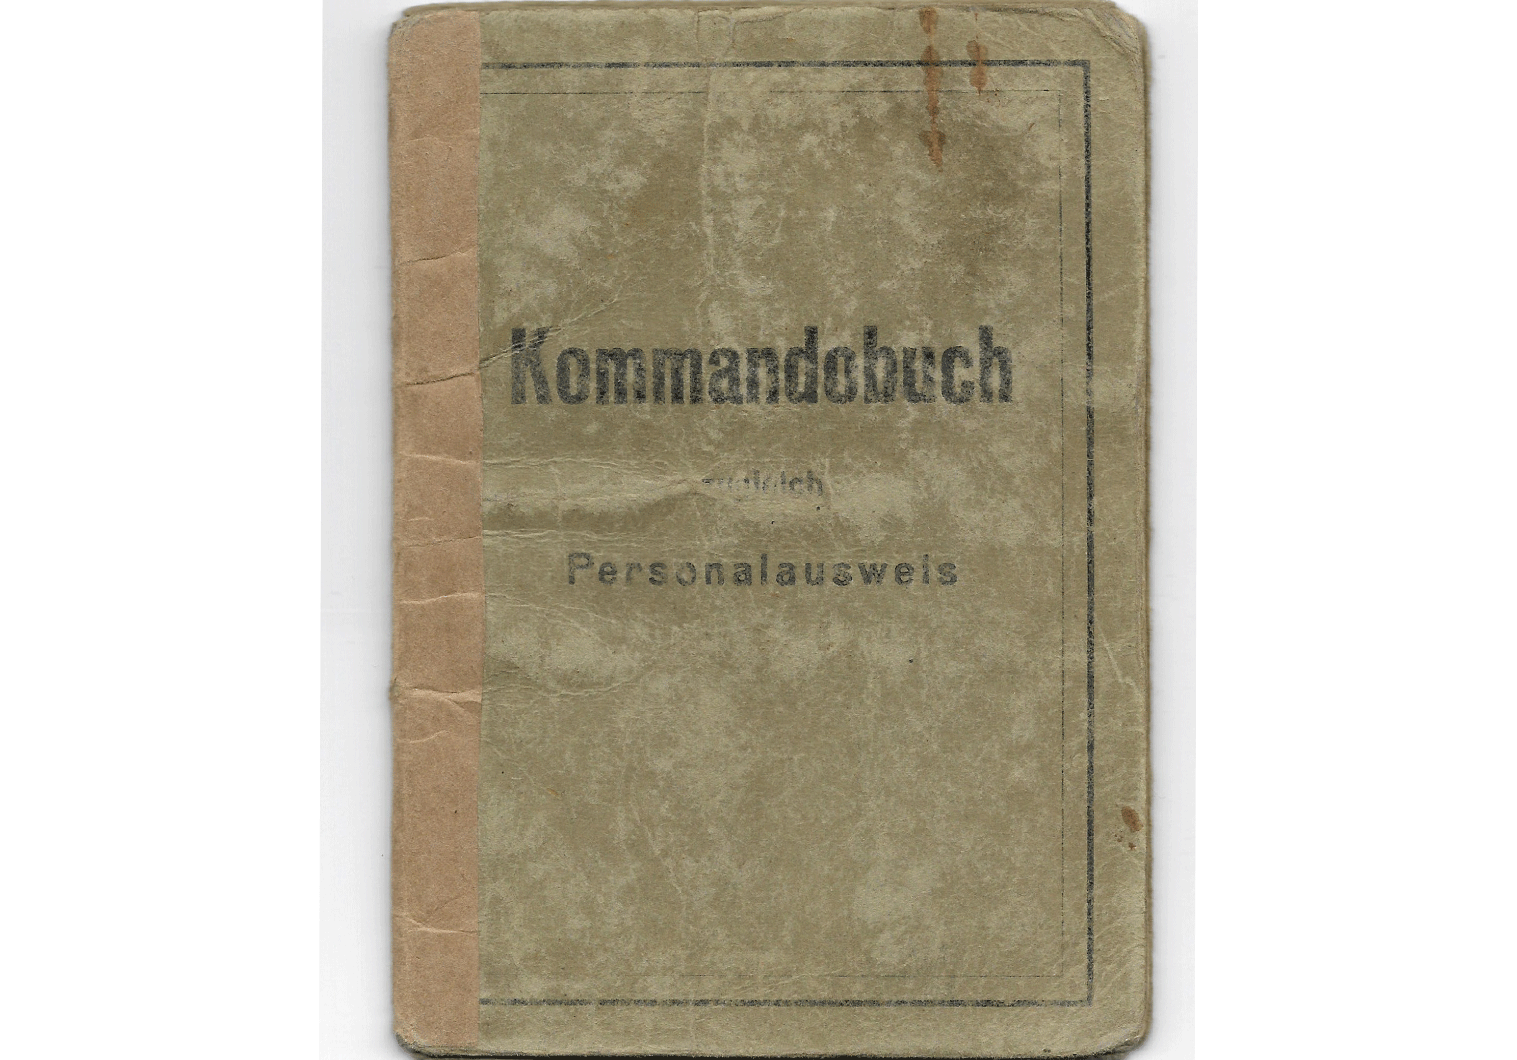 Rare VoMi issued SS Kommandobuch